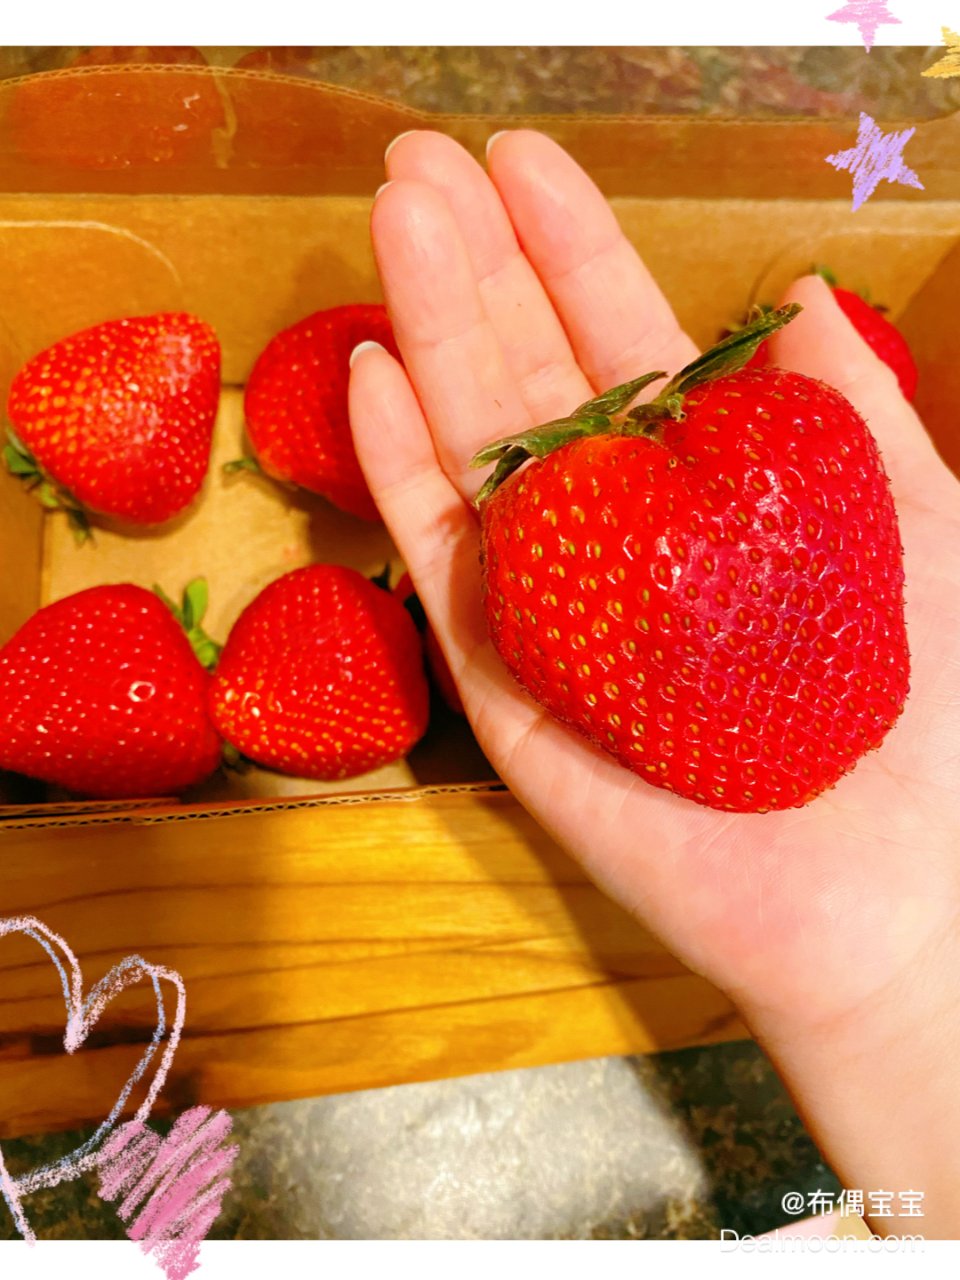 Berry Big超大号草莓来咯🍓...